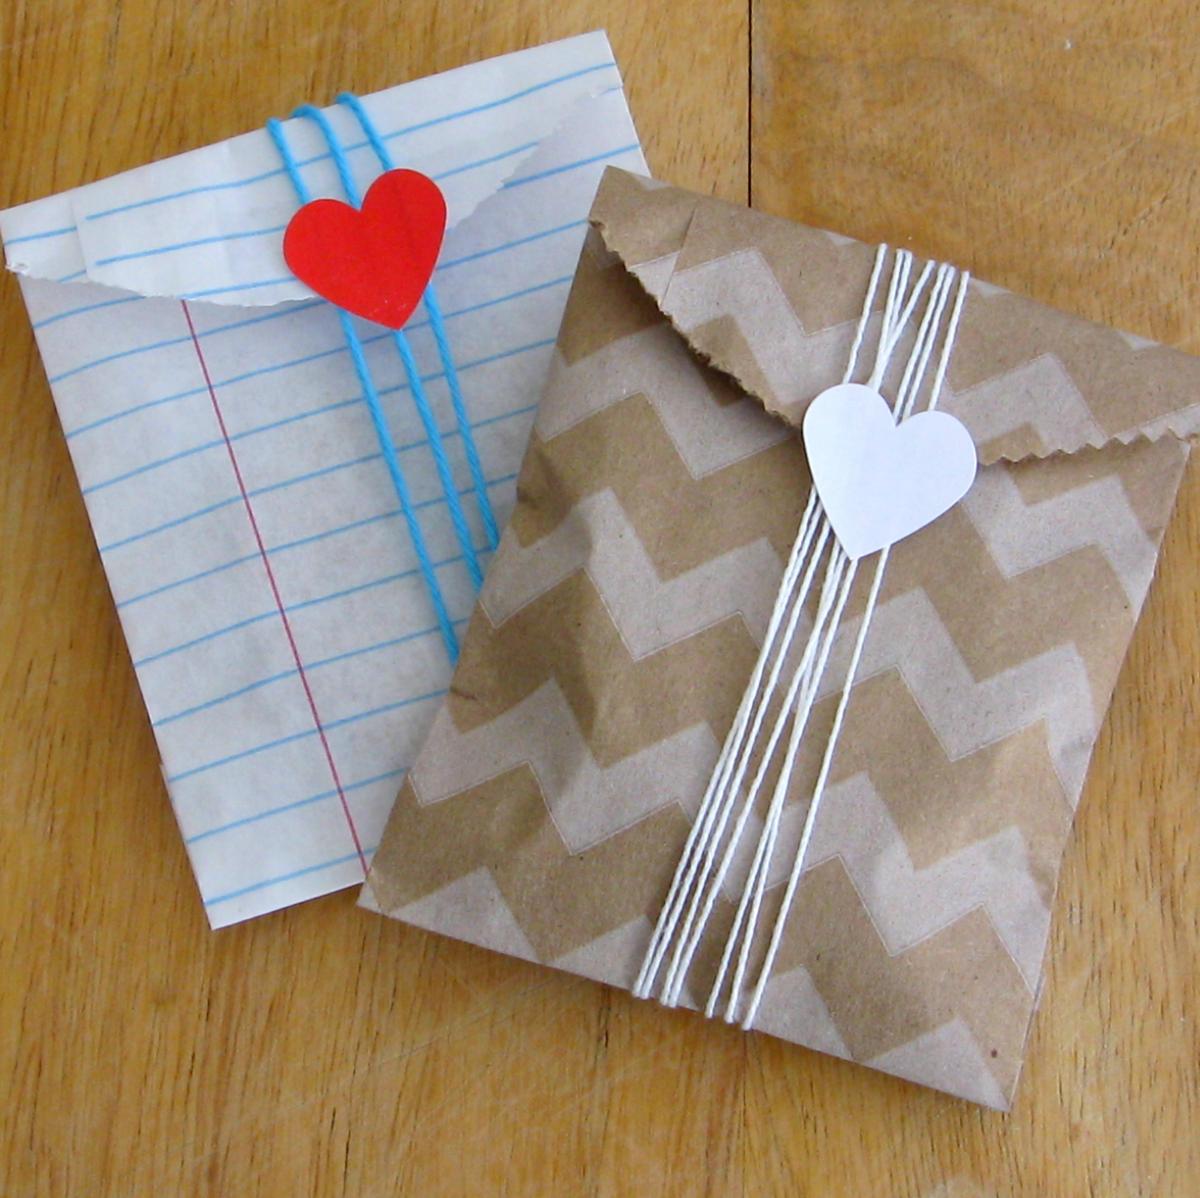 Heart Stickers - 48 - 3/4 Inch Heart Sticker Sheets - Envelop Seals Gift Wrap Seals